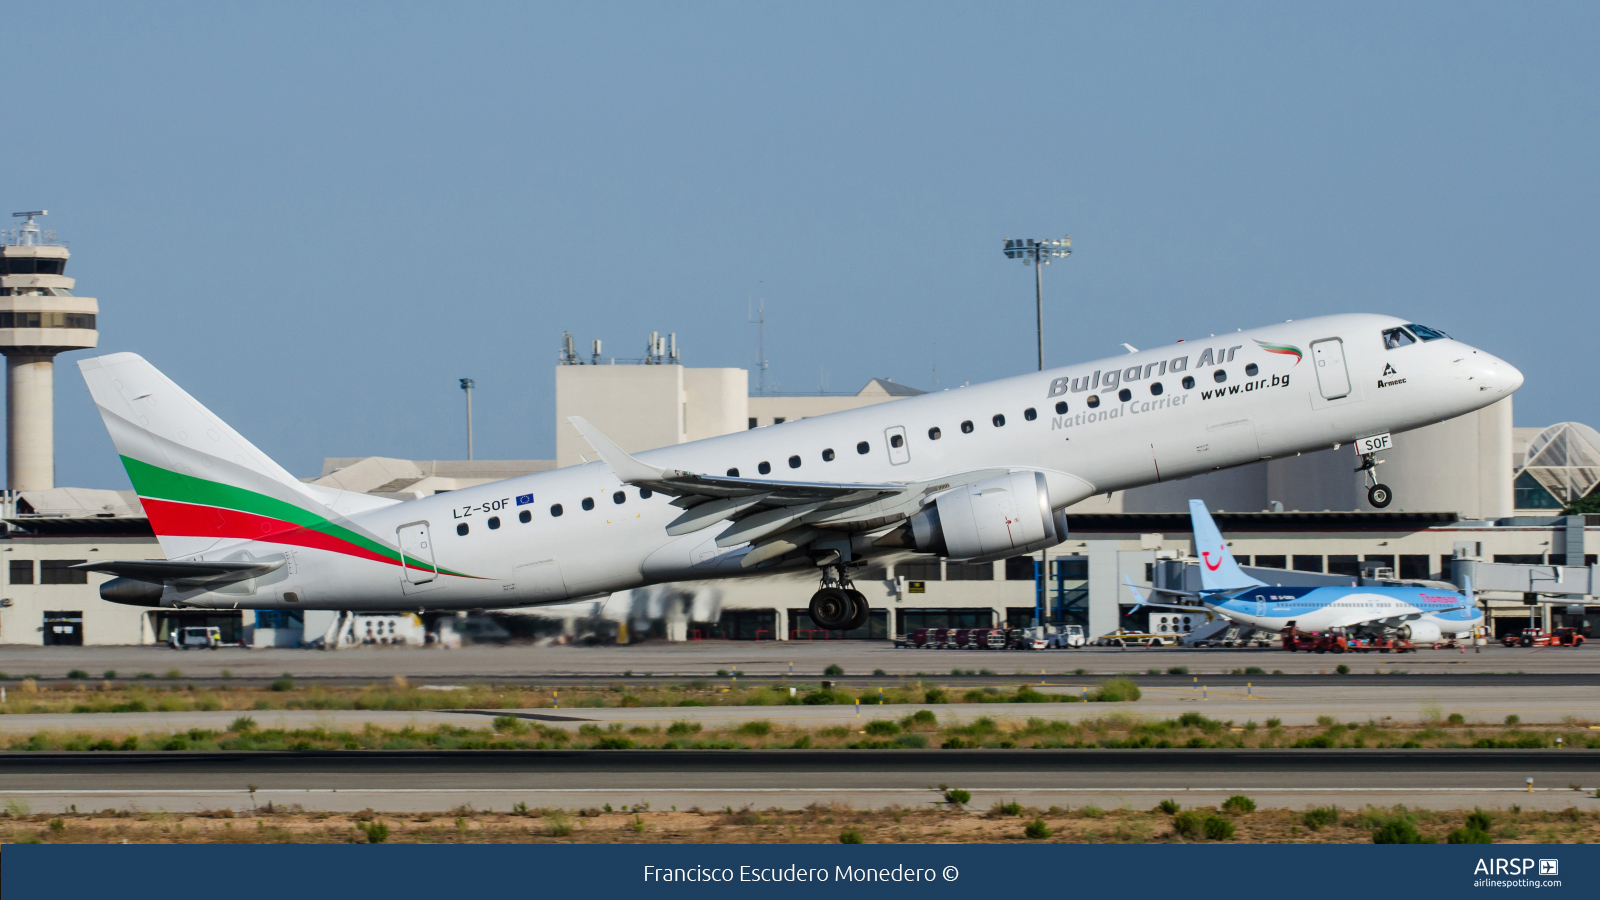 Bulgaria Air  Embraer E190  LZ-SOF